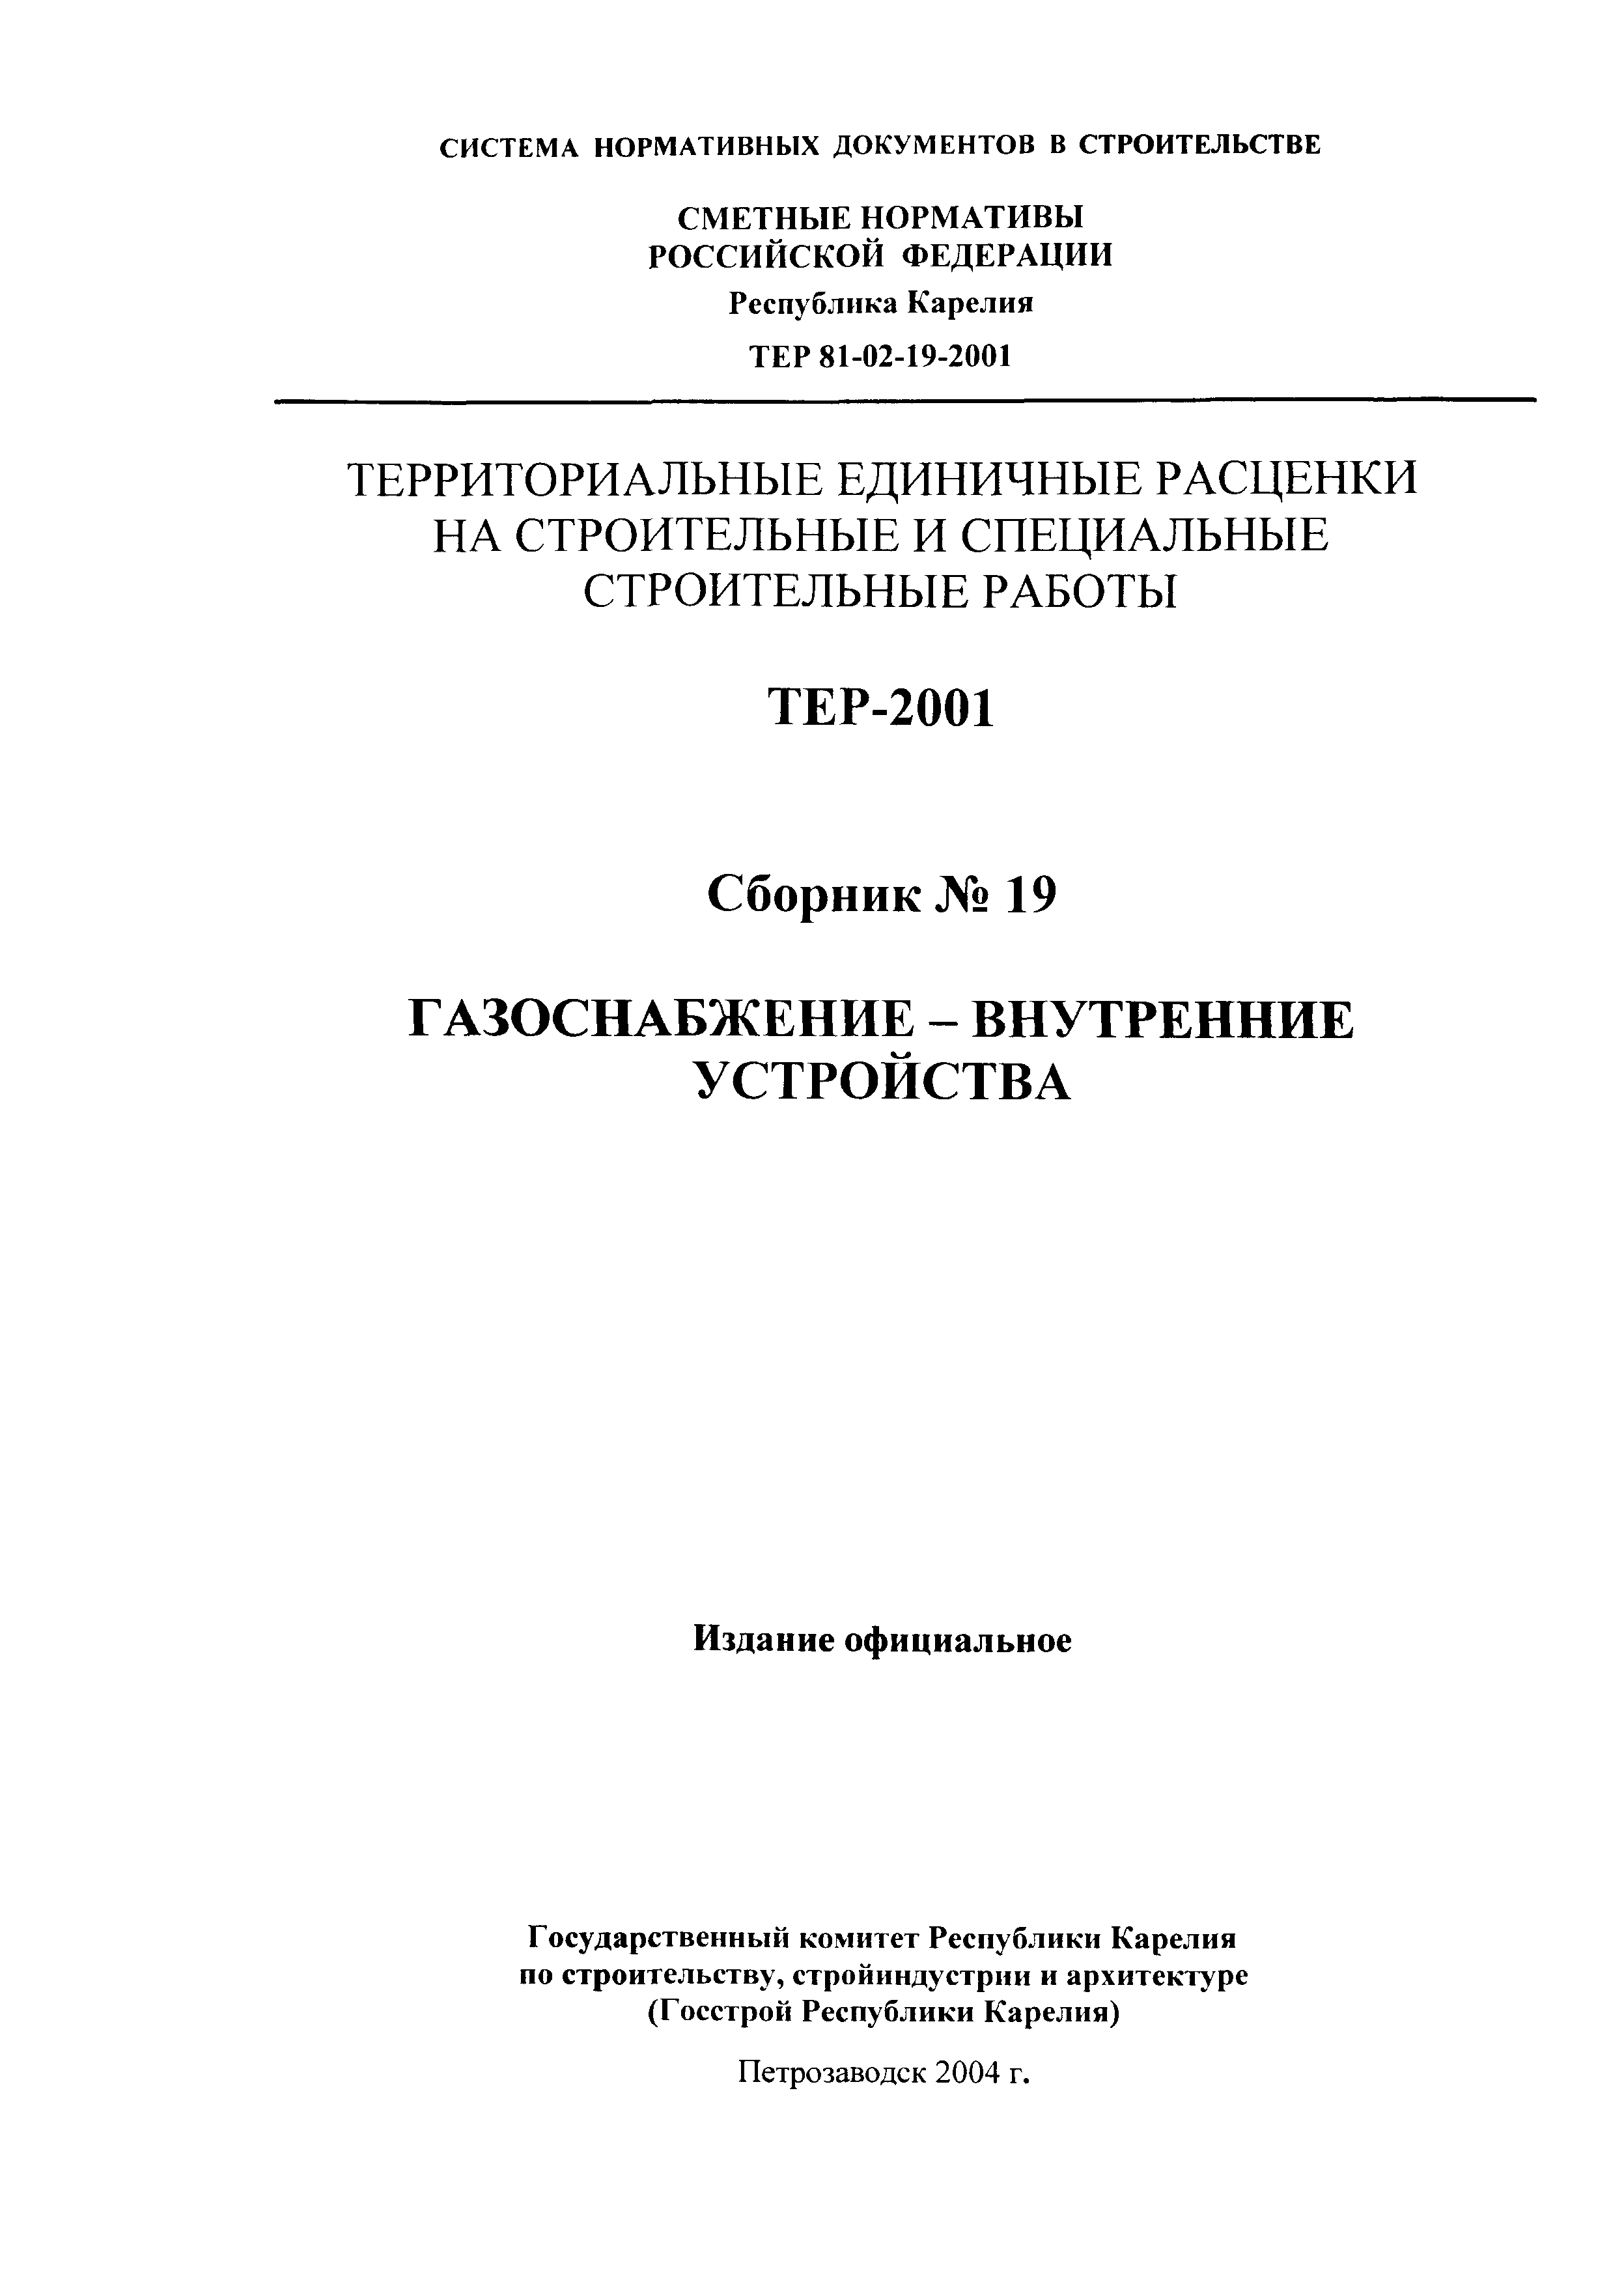 ТЕР Республика Карелия 2001-19